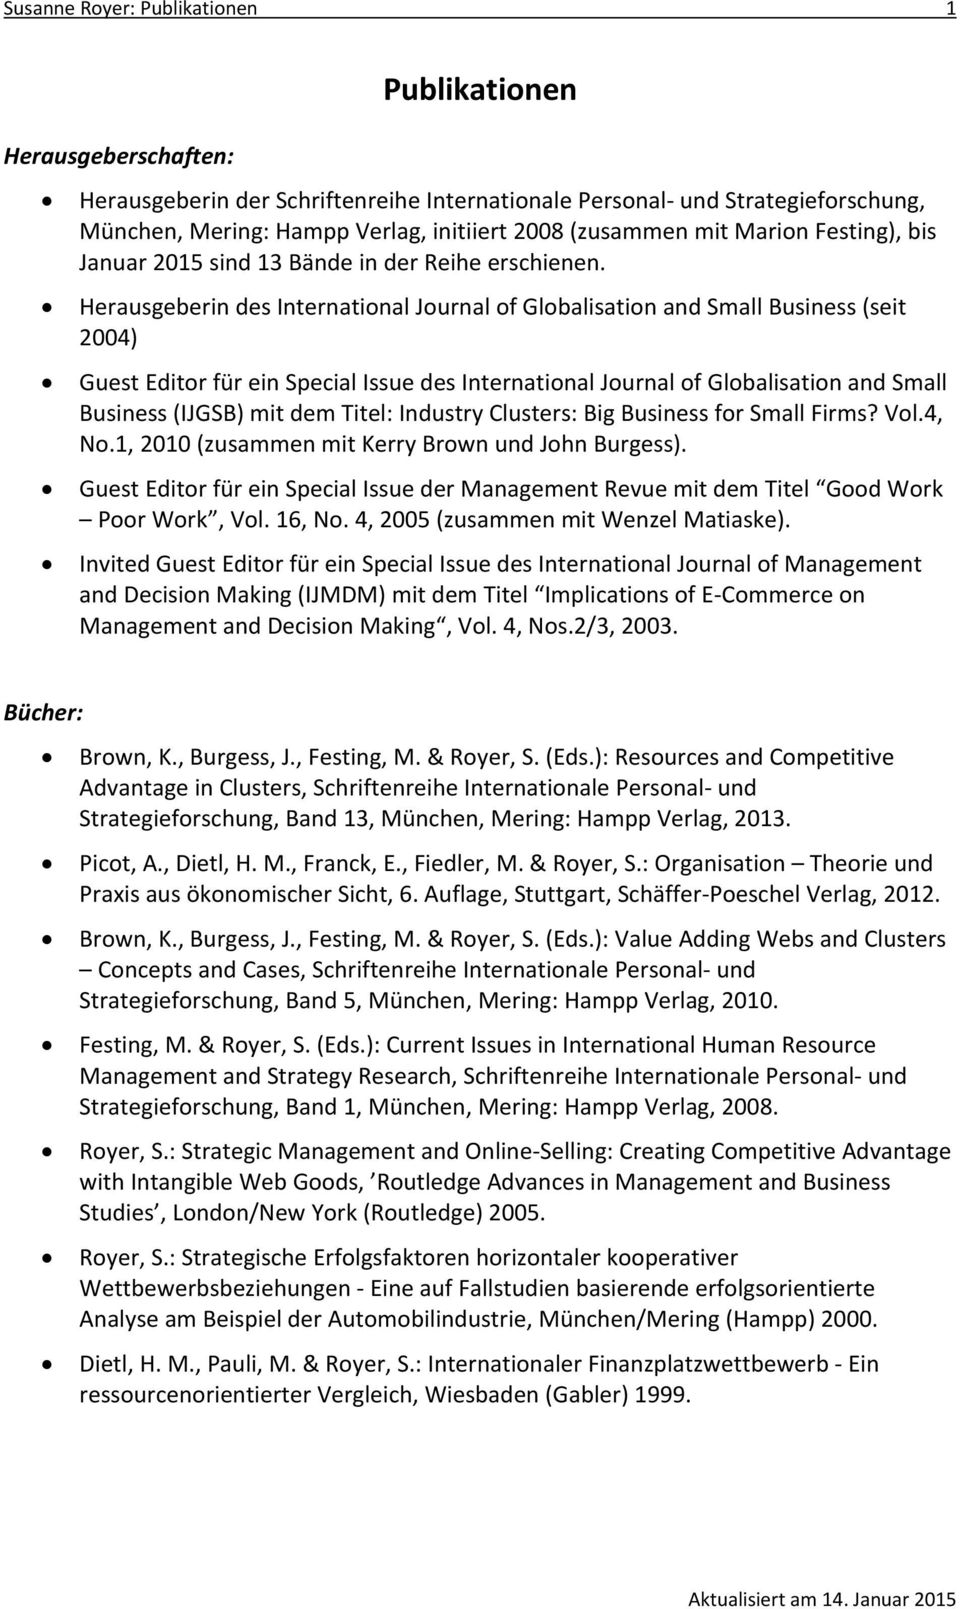 Herausgeberin des International Journal of Globalisation and Small Business (seit 2004) Guest Editor für ein Special Issue des International Journal of Globalisation and Small Business (IJGSB) mit